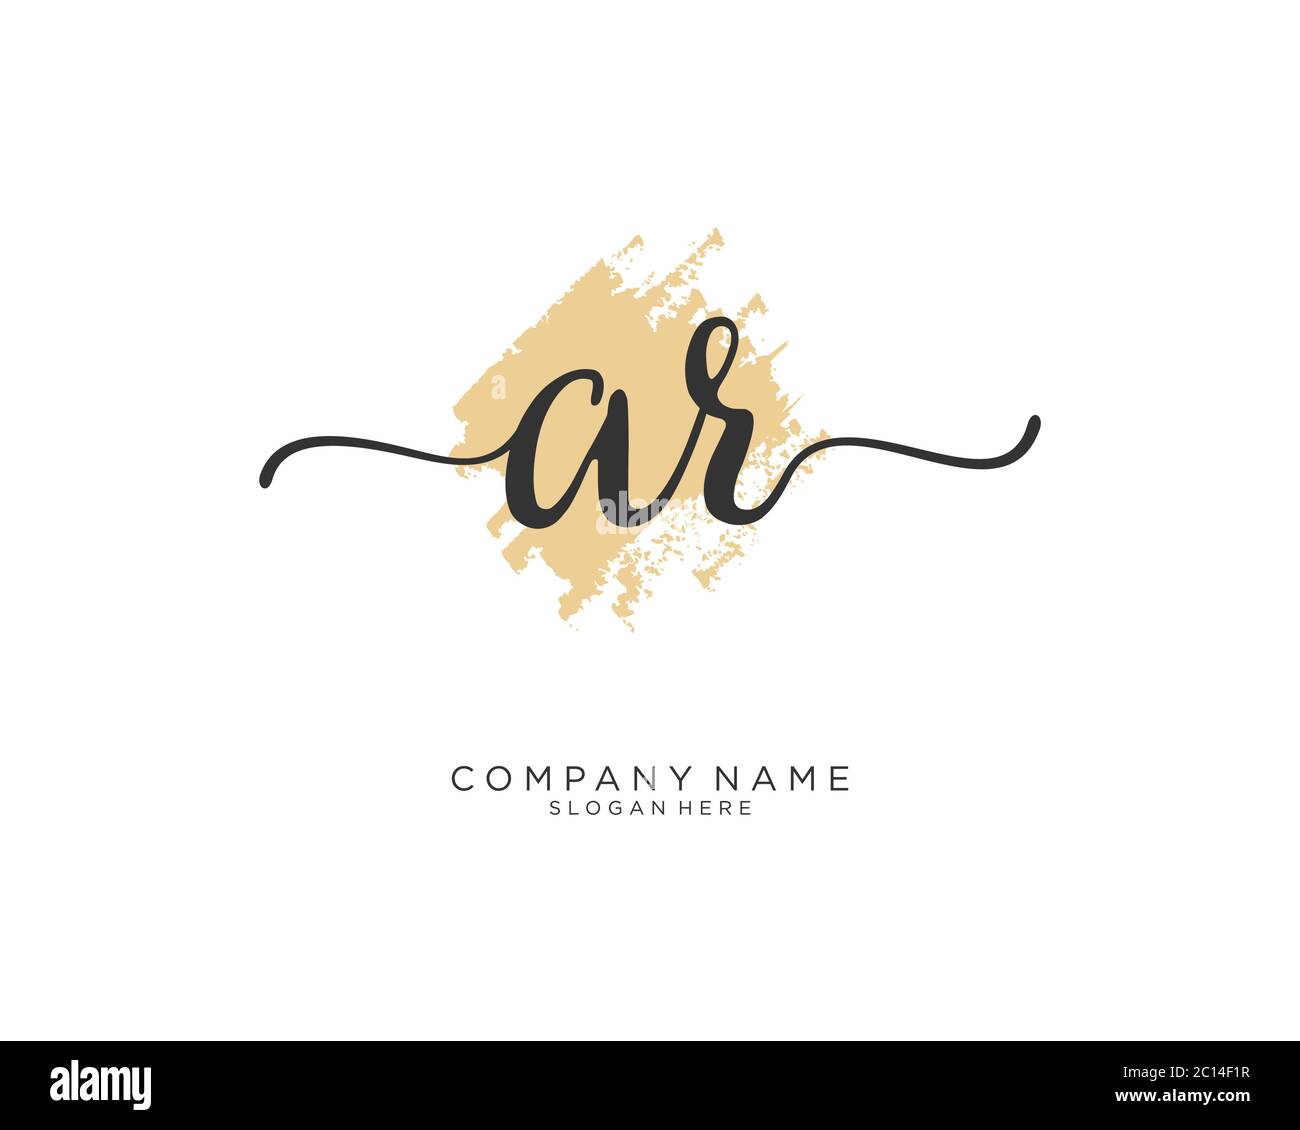 AR Initial handwriting logo vector Stock Vector